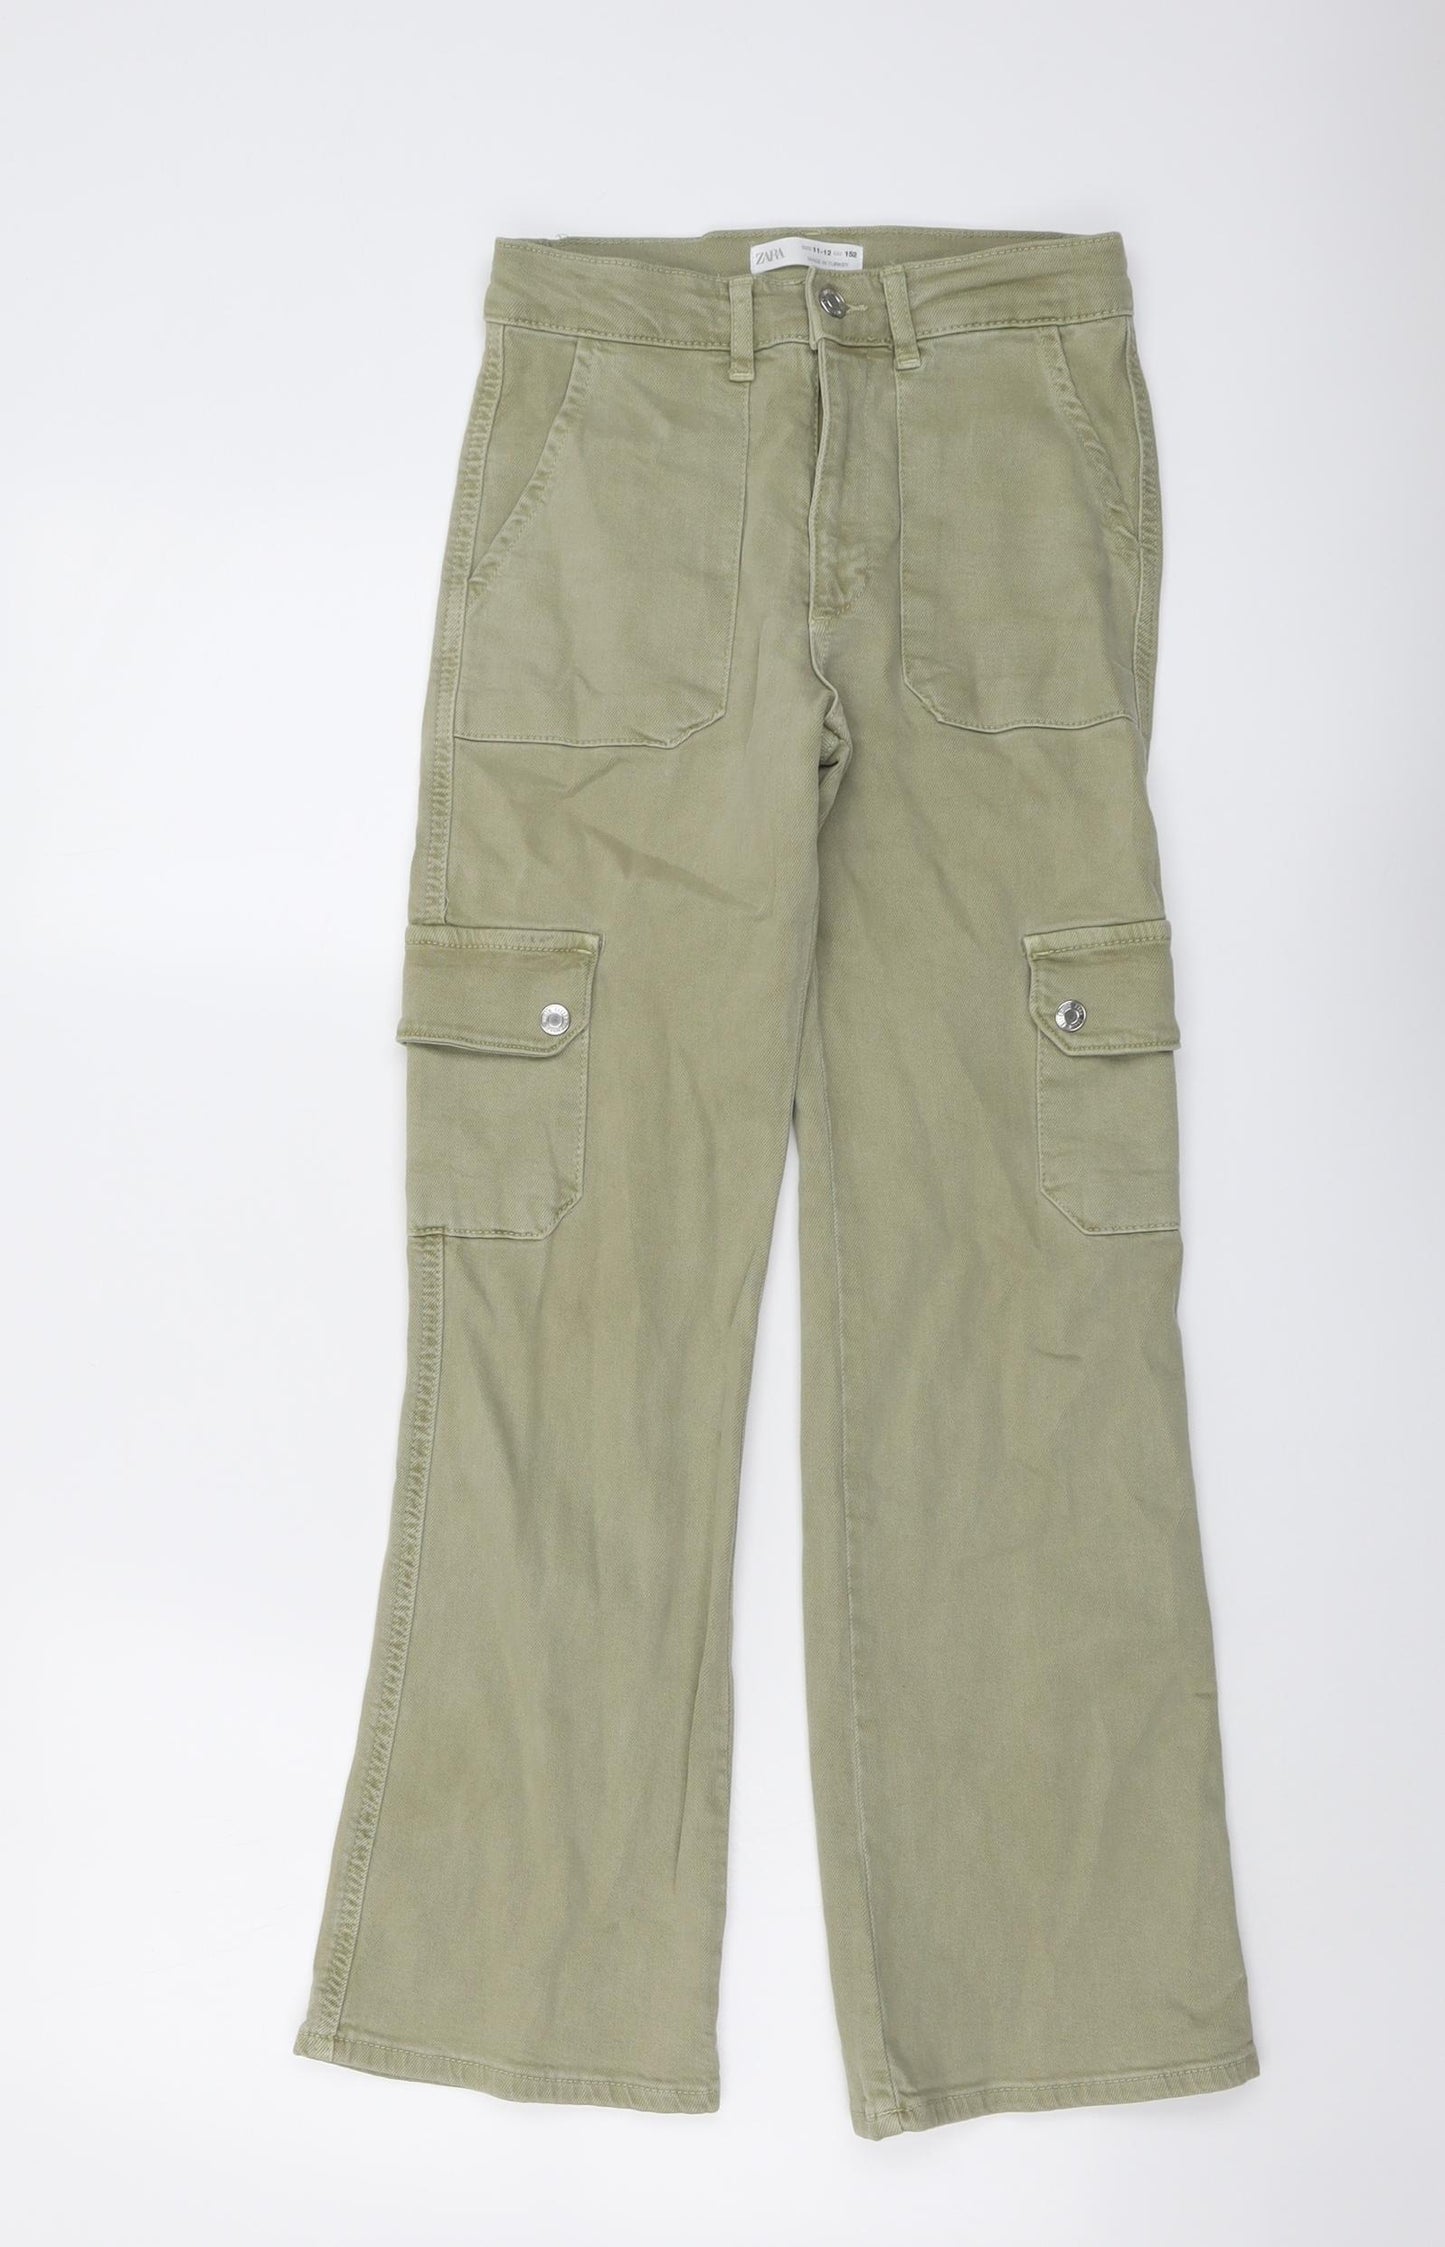 Zara Girls Green Cotton Bootcut Jeans Size 11-12 Years Regular Button - Cargo